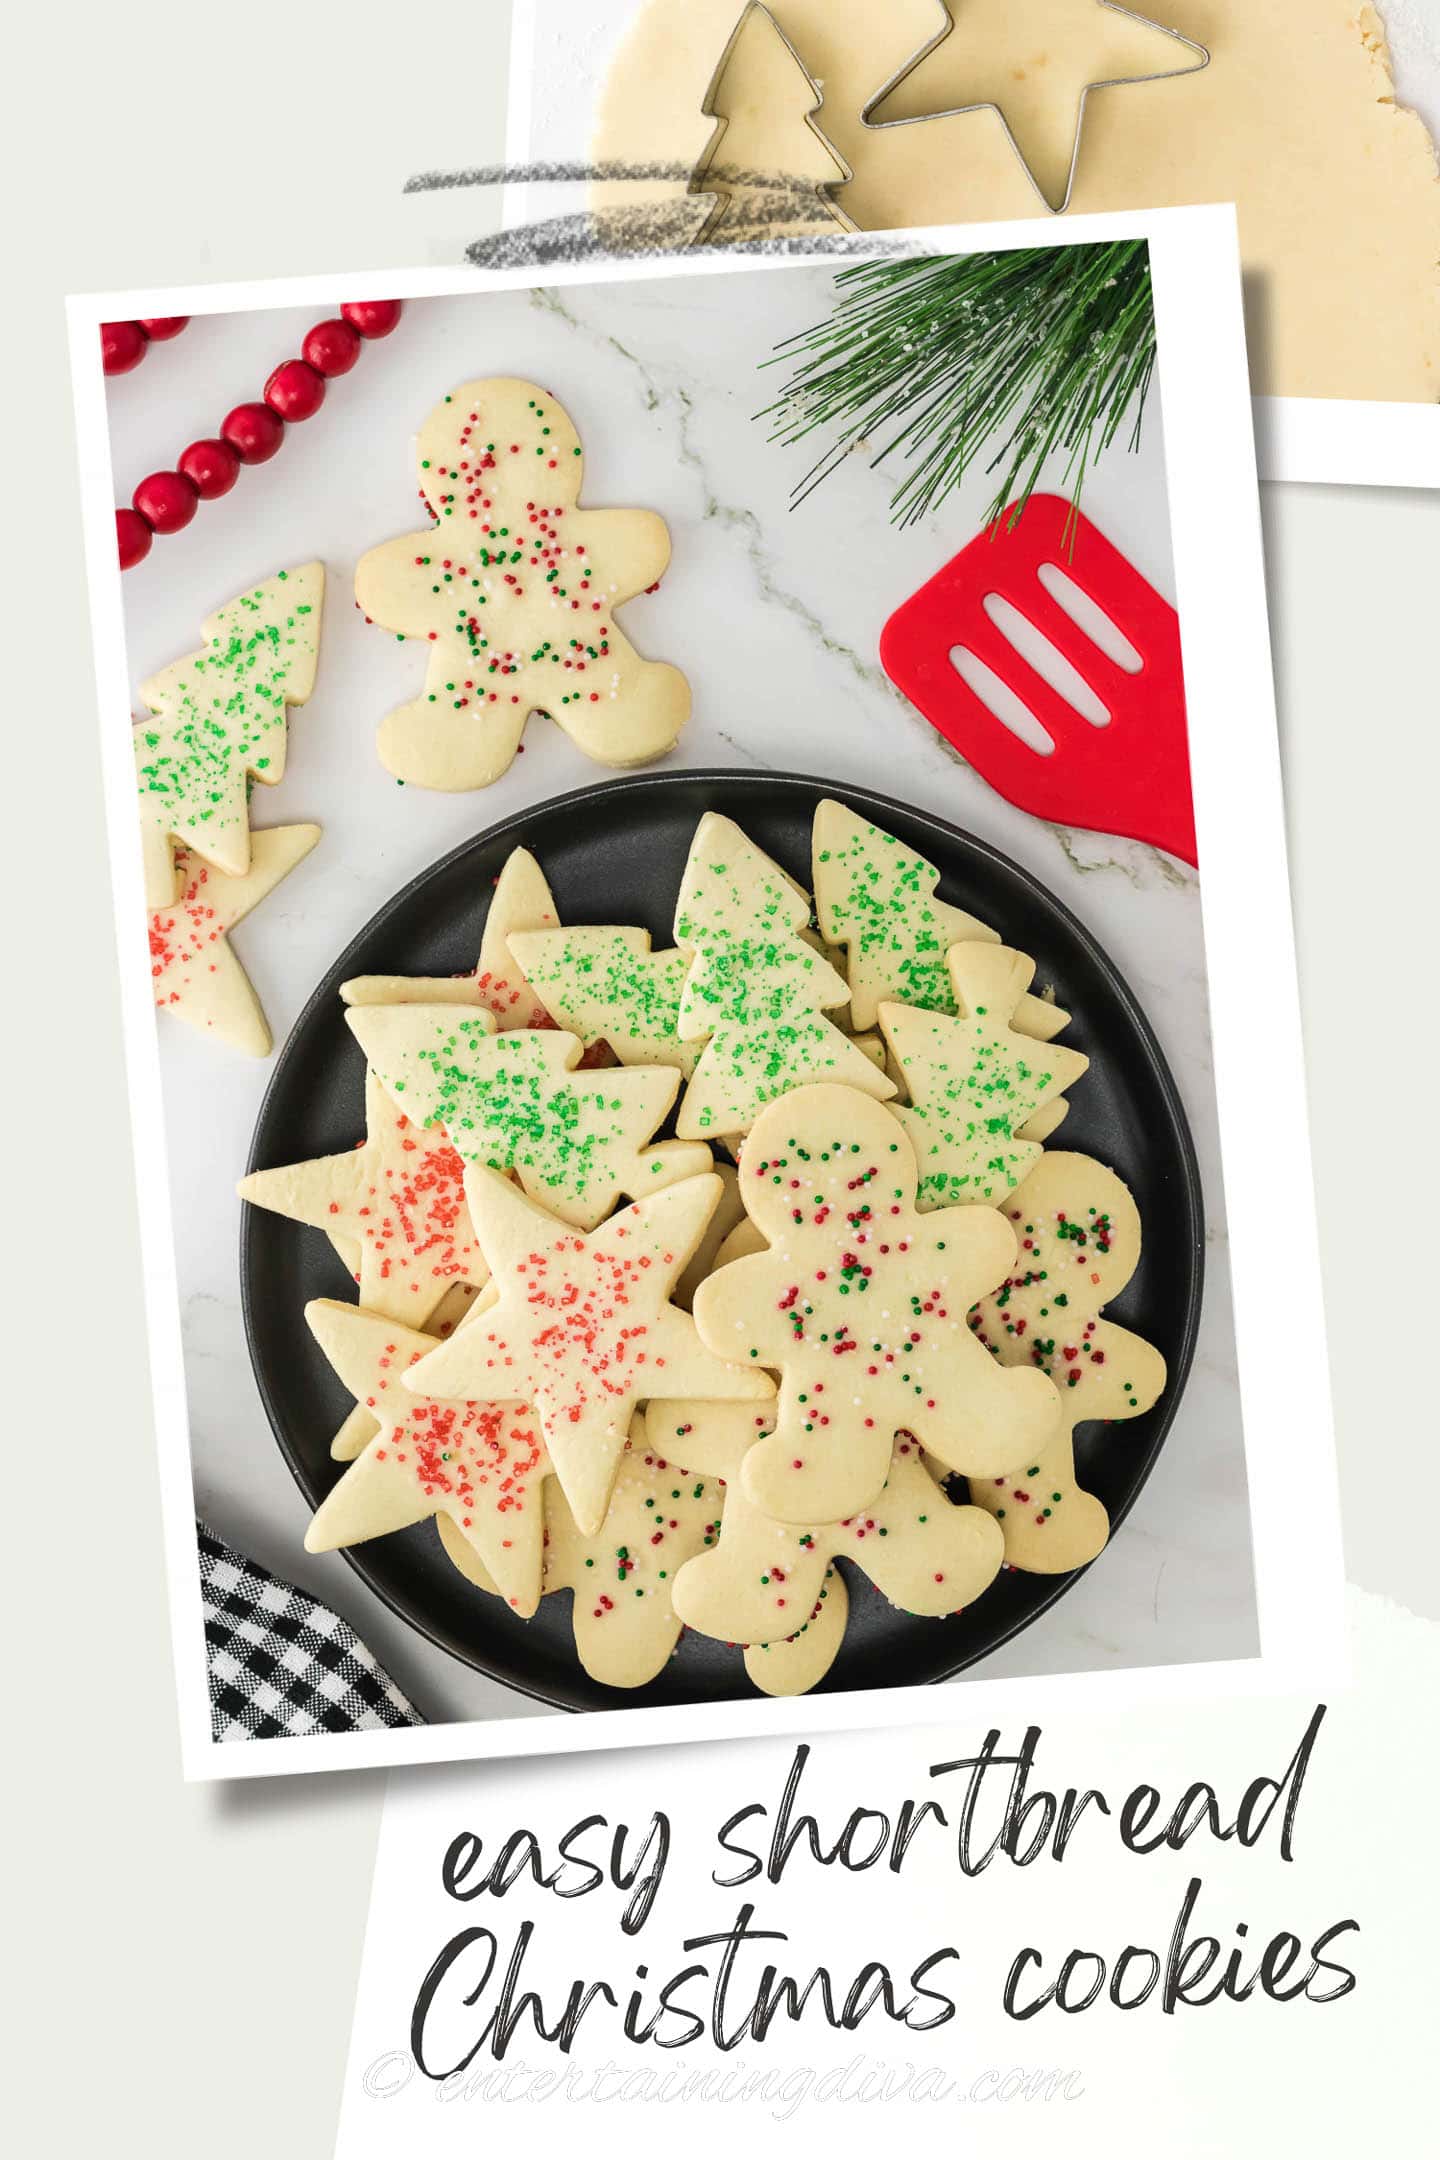 easy shortbread Christmas cookies with sprinkles